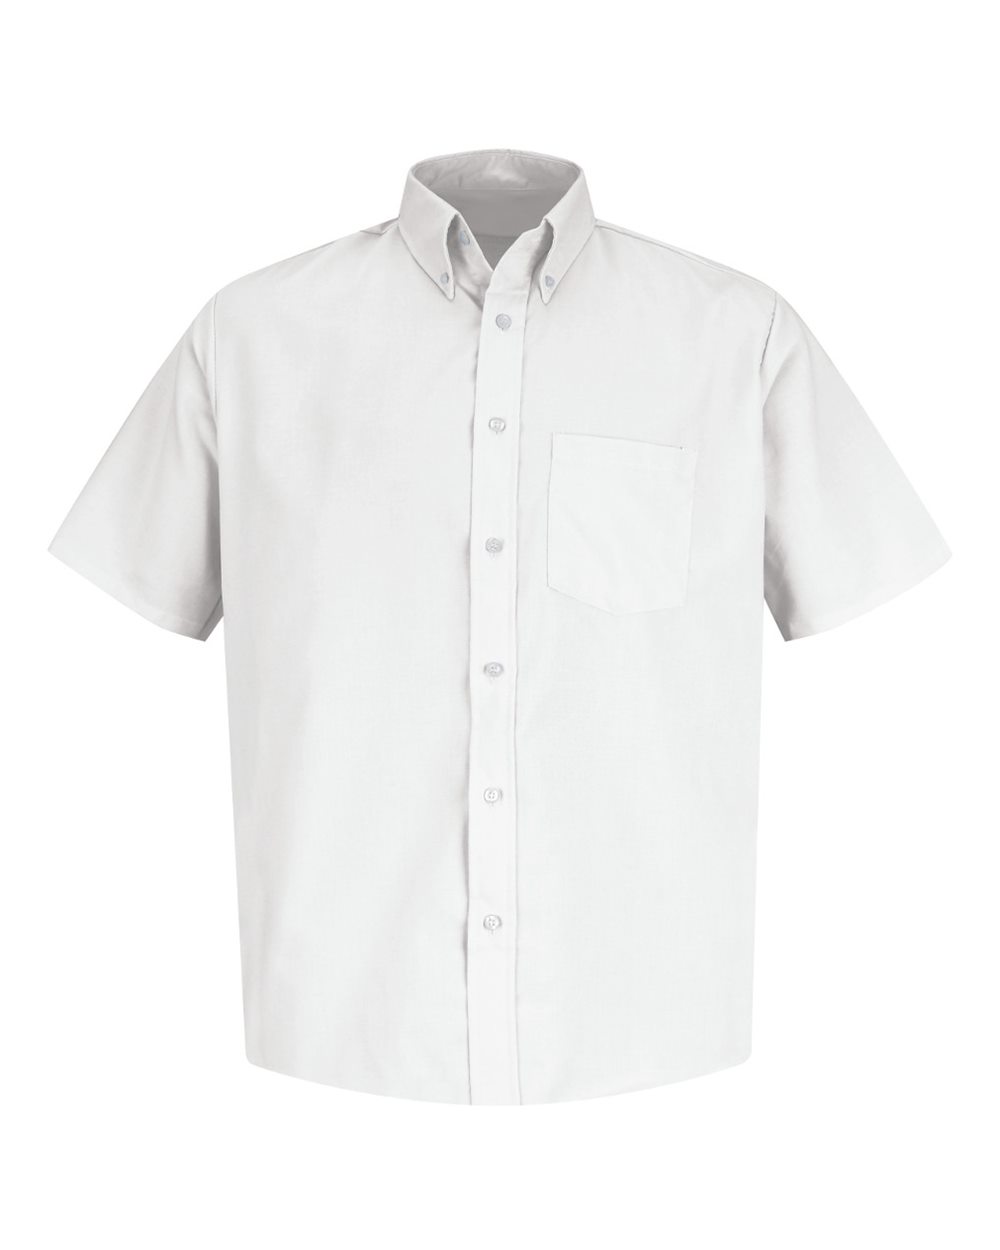 83730  Easy Care Short Sleeve Dress Shirt - SS46        